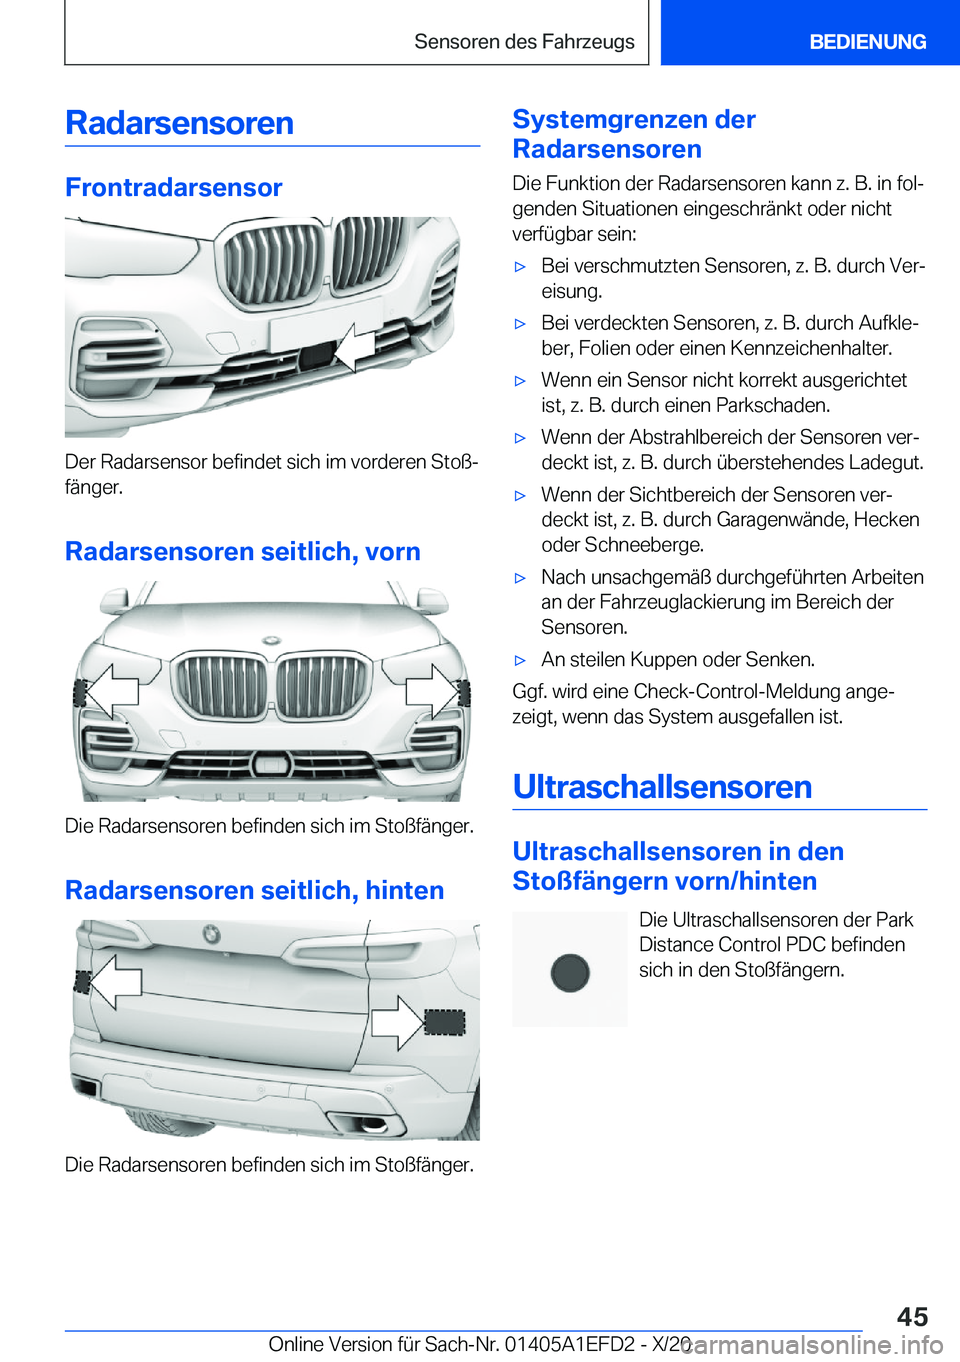 BMW X7 2021  Betriebsanleitungen (in German) �R�a�d�a�r�s�e�n�s�o�r�e�n
�F�r�o�n�t�r�a�d�a�r�s�e�n�s�o�r
�D�e�r��R�a�d�a�r�s�e�n�s�o�r��b�e�f�i�n�d�e�t��s�i�c�h��i�m��v�o�r�d�e�r�e�n��S�t�o�